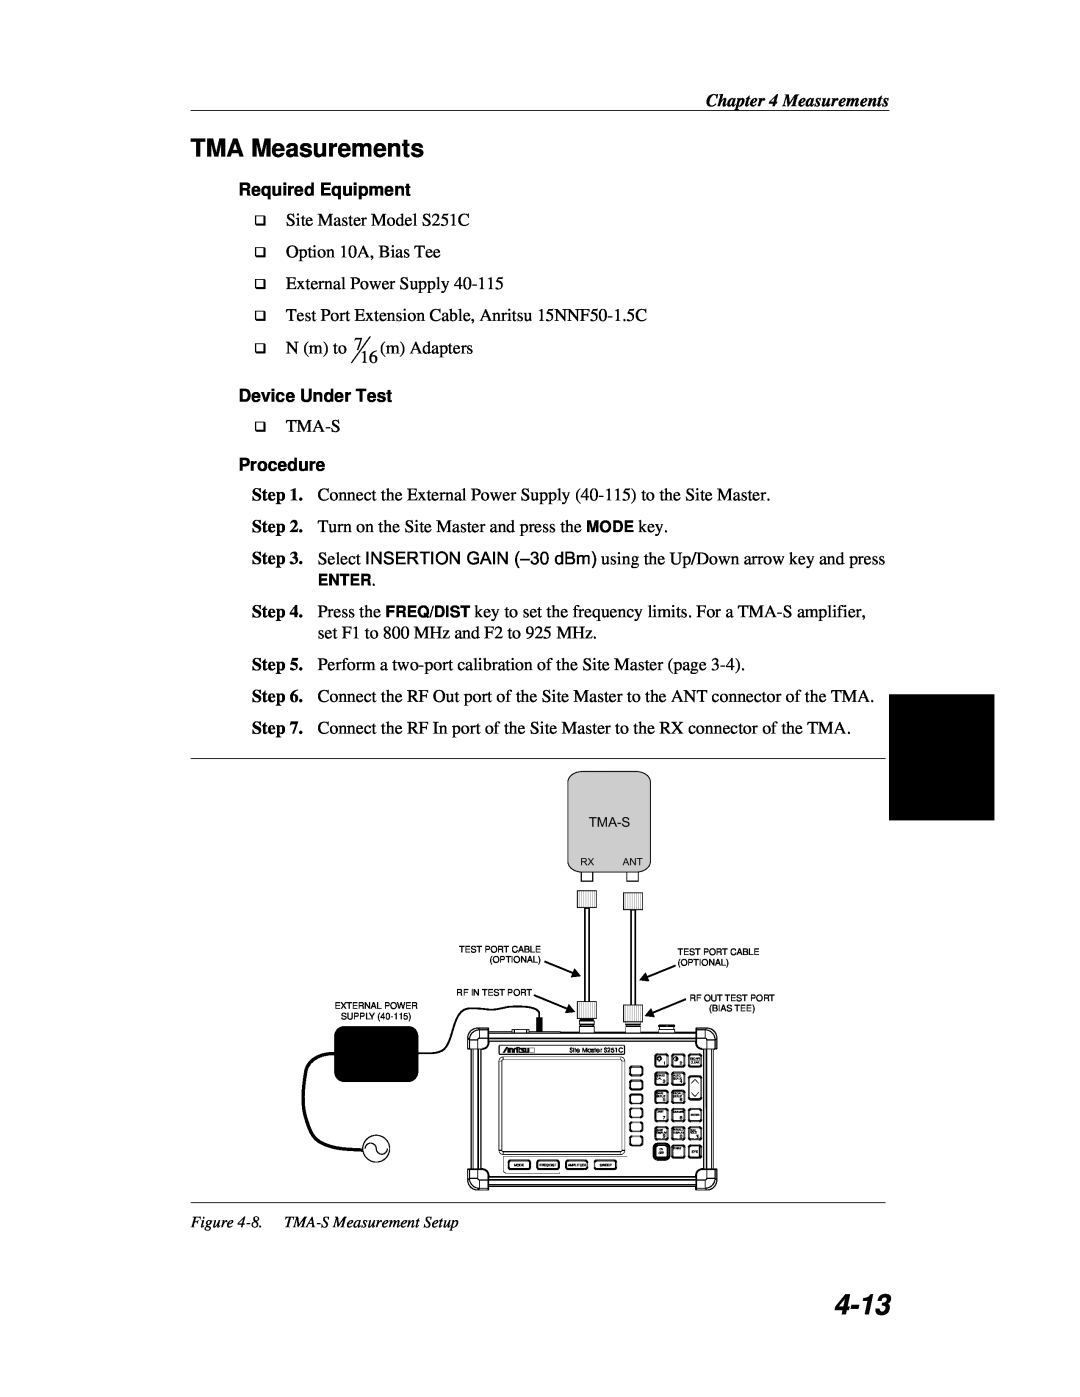 Anritsu S251C manual 4-13, TMA Measurements, Required Equipment, Device Under Test, Procedure 